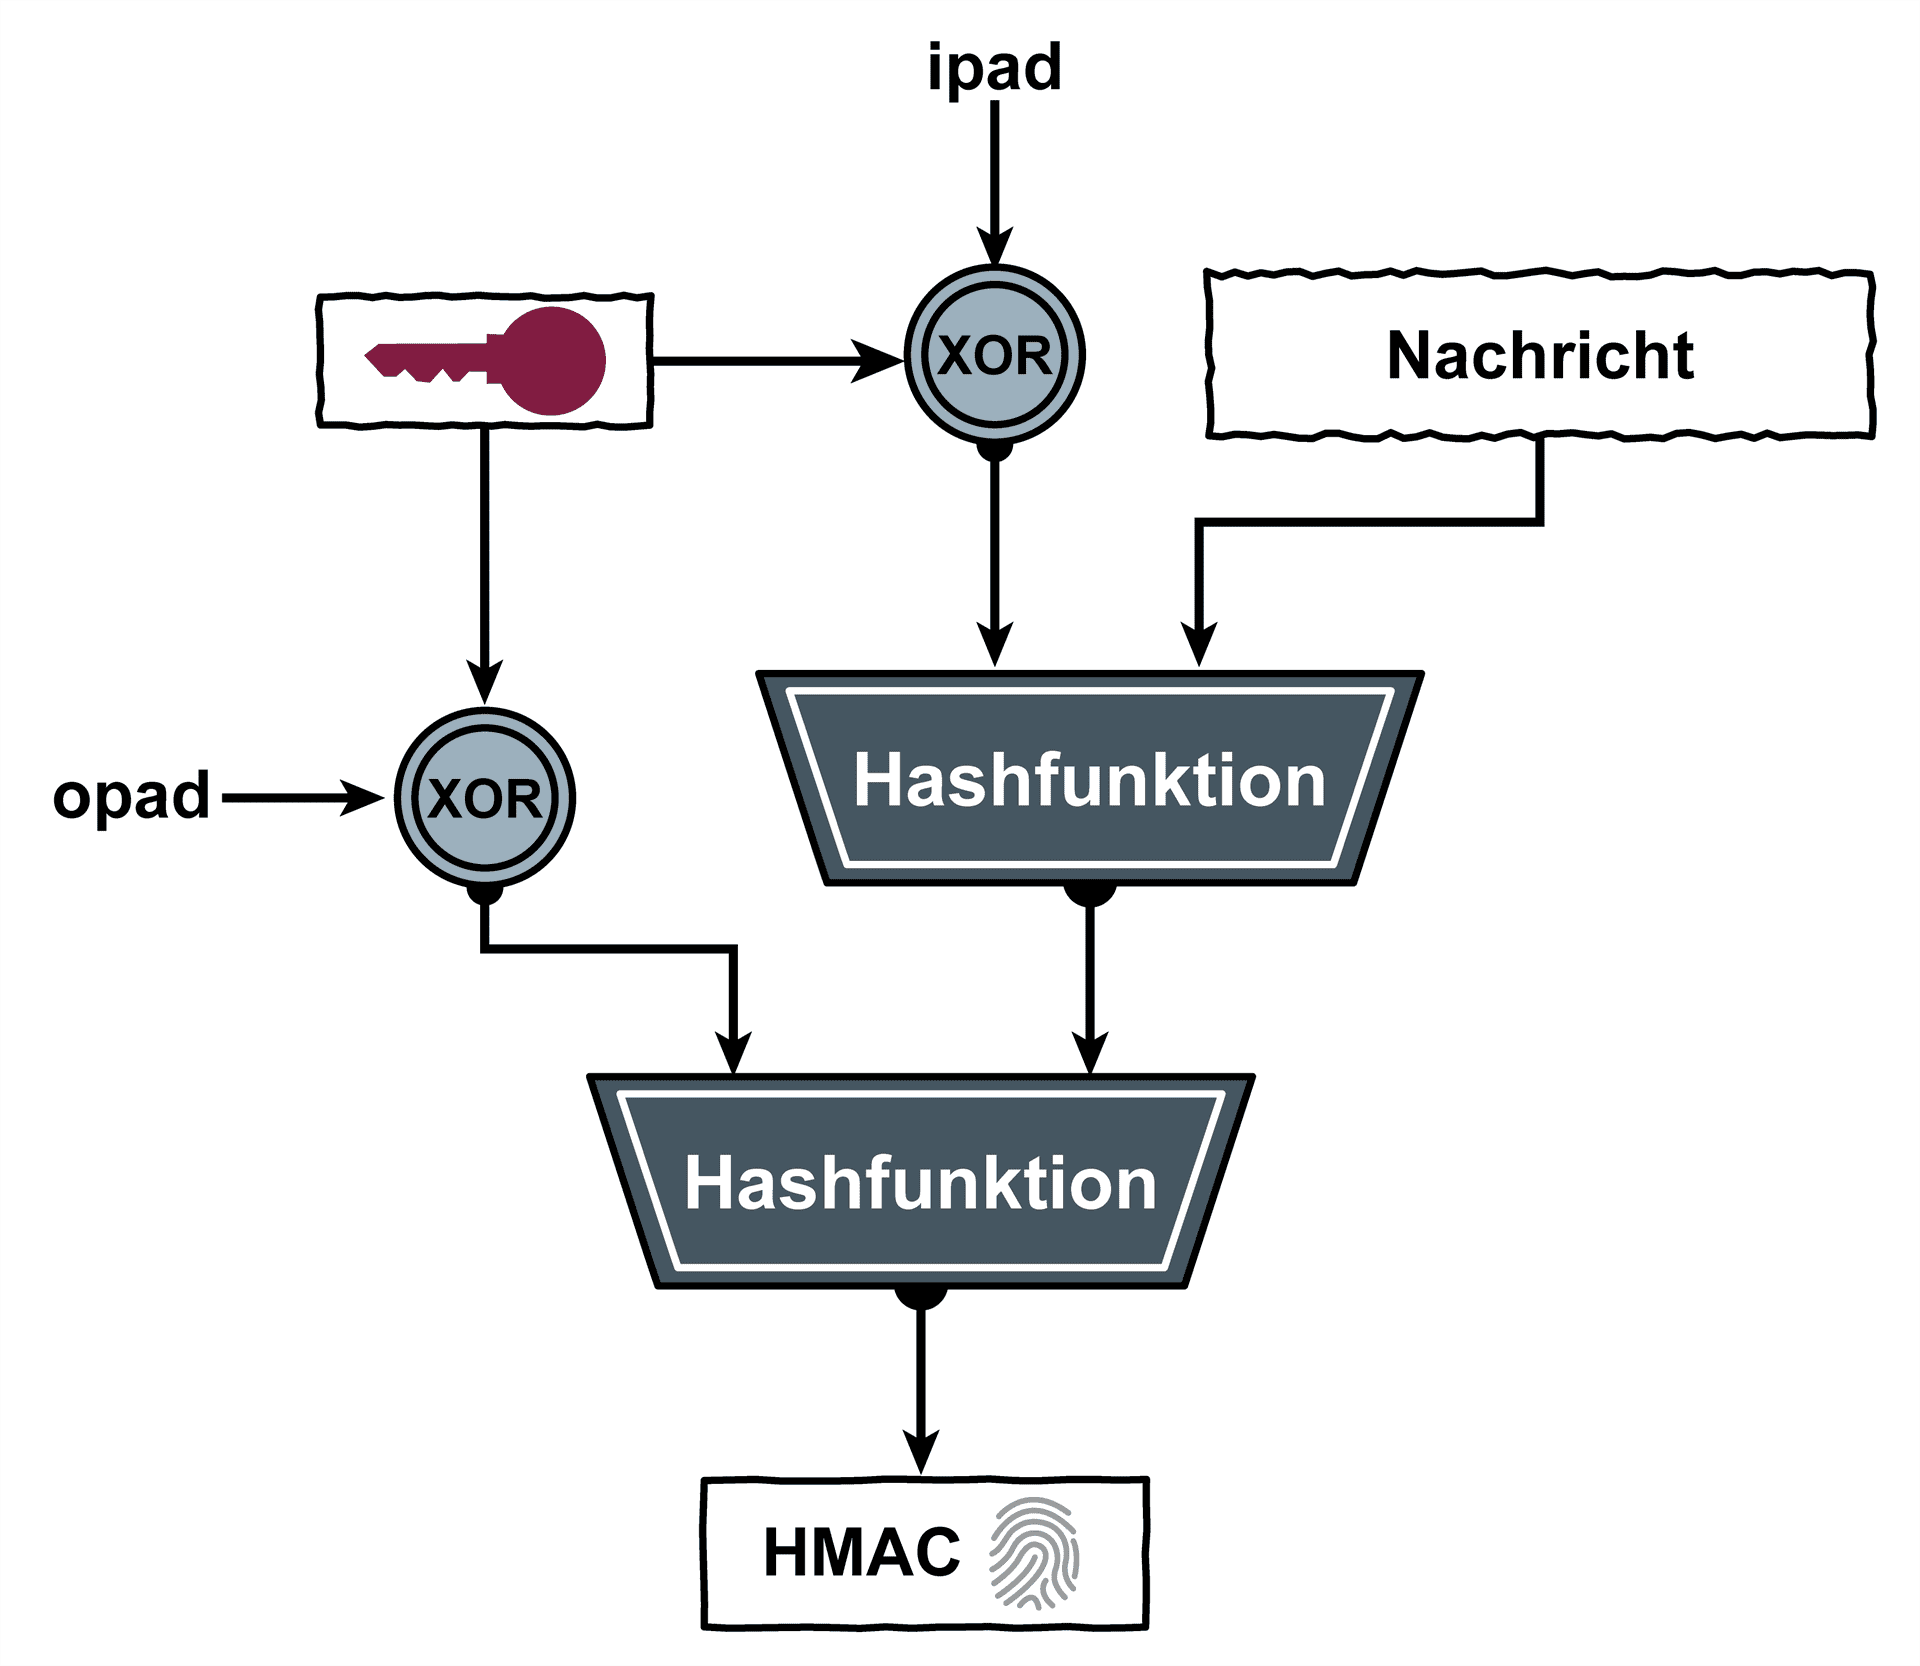 Keyed-Hashing for Message Authentication (HMAC) als Ablaufdiagramm